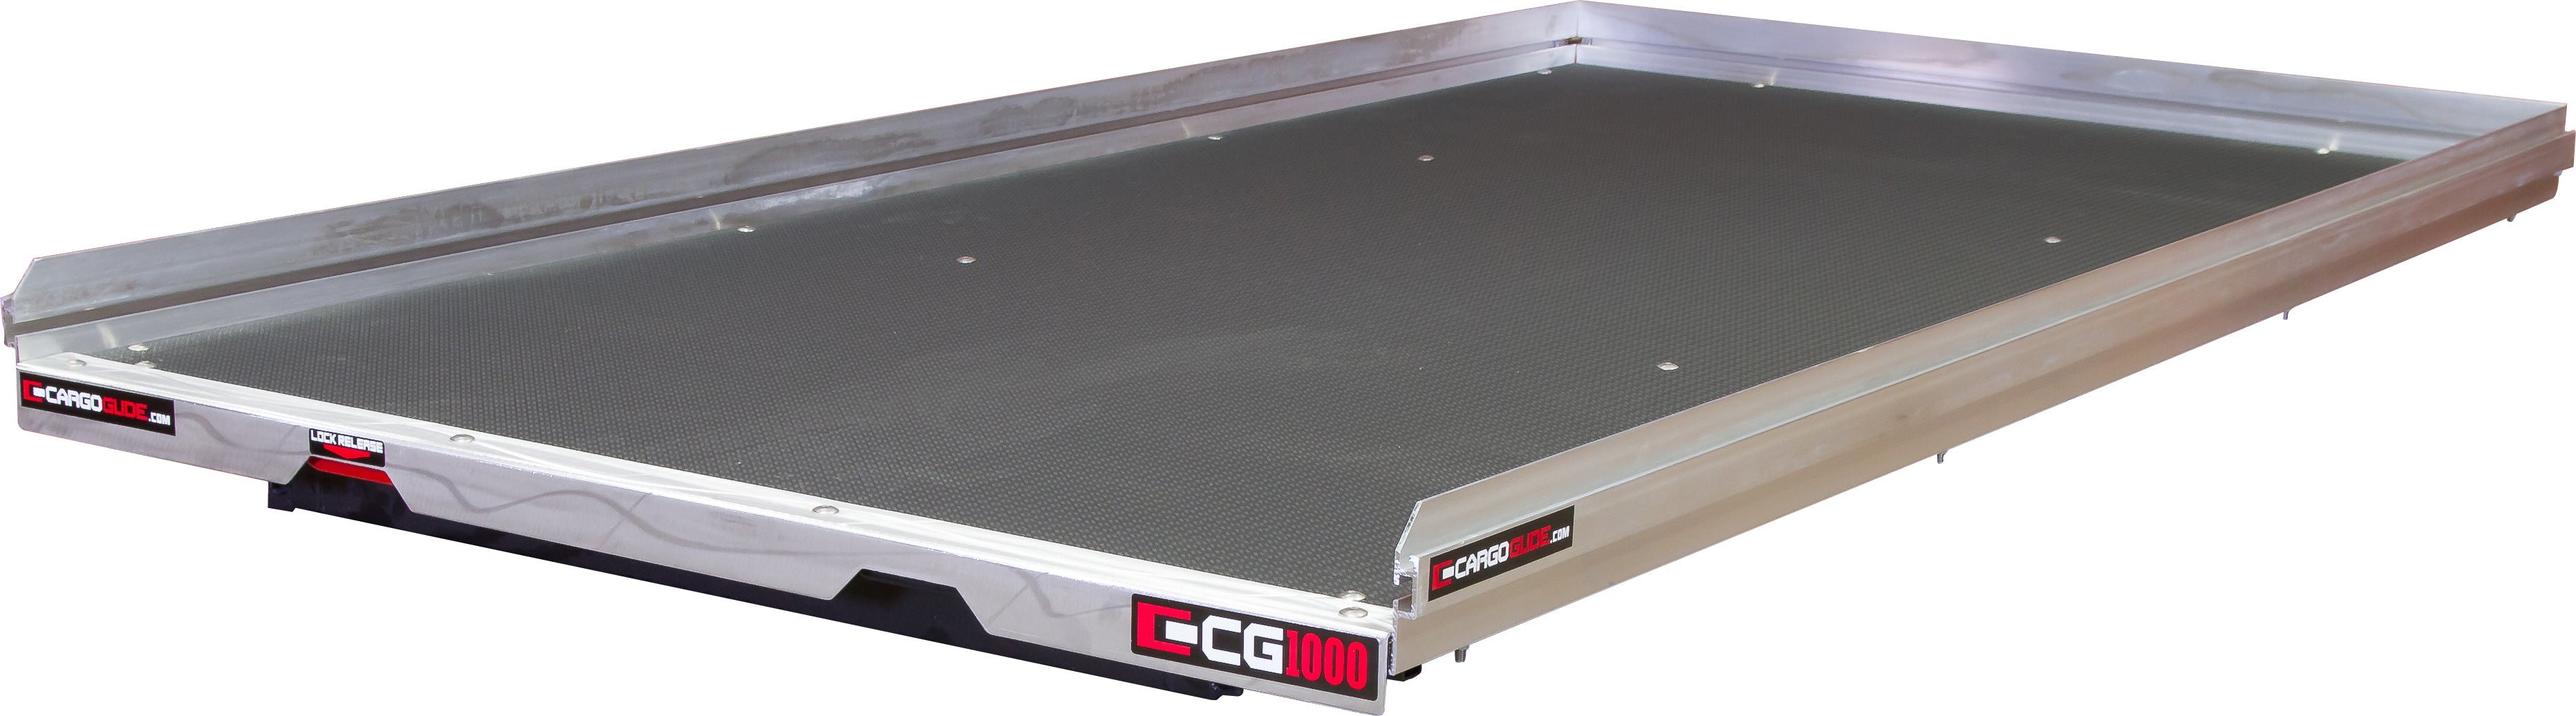 CargoGlide CG1000-9548, Slide Out Cargo Tray - 1000 lb capacity.